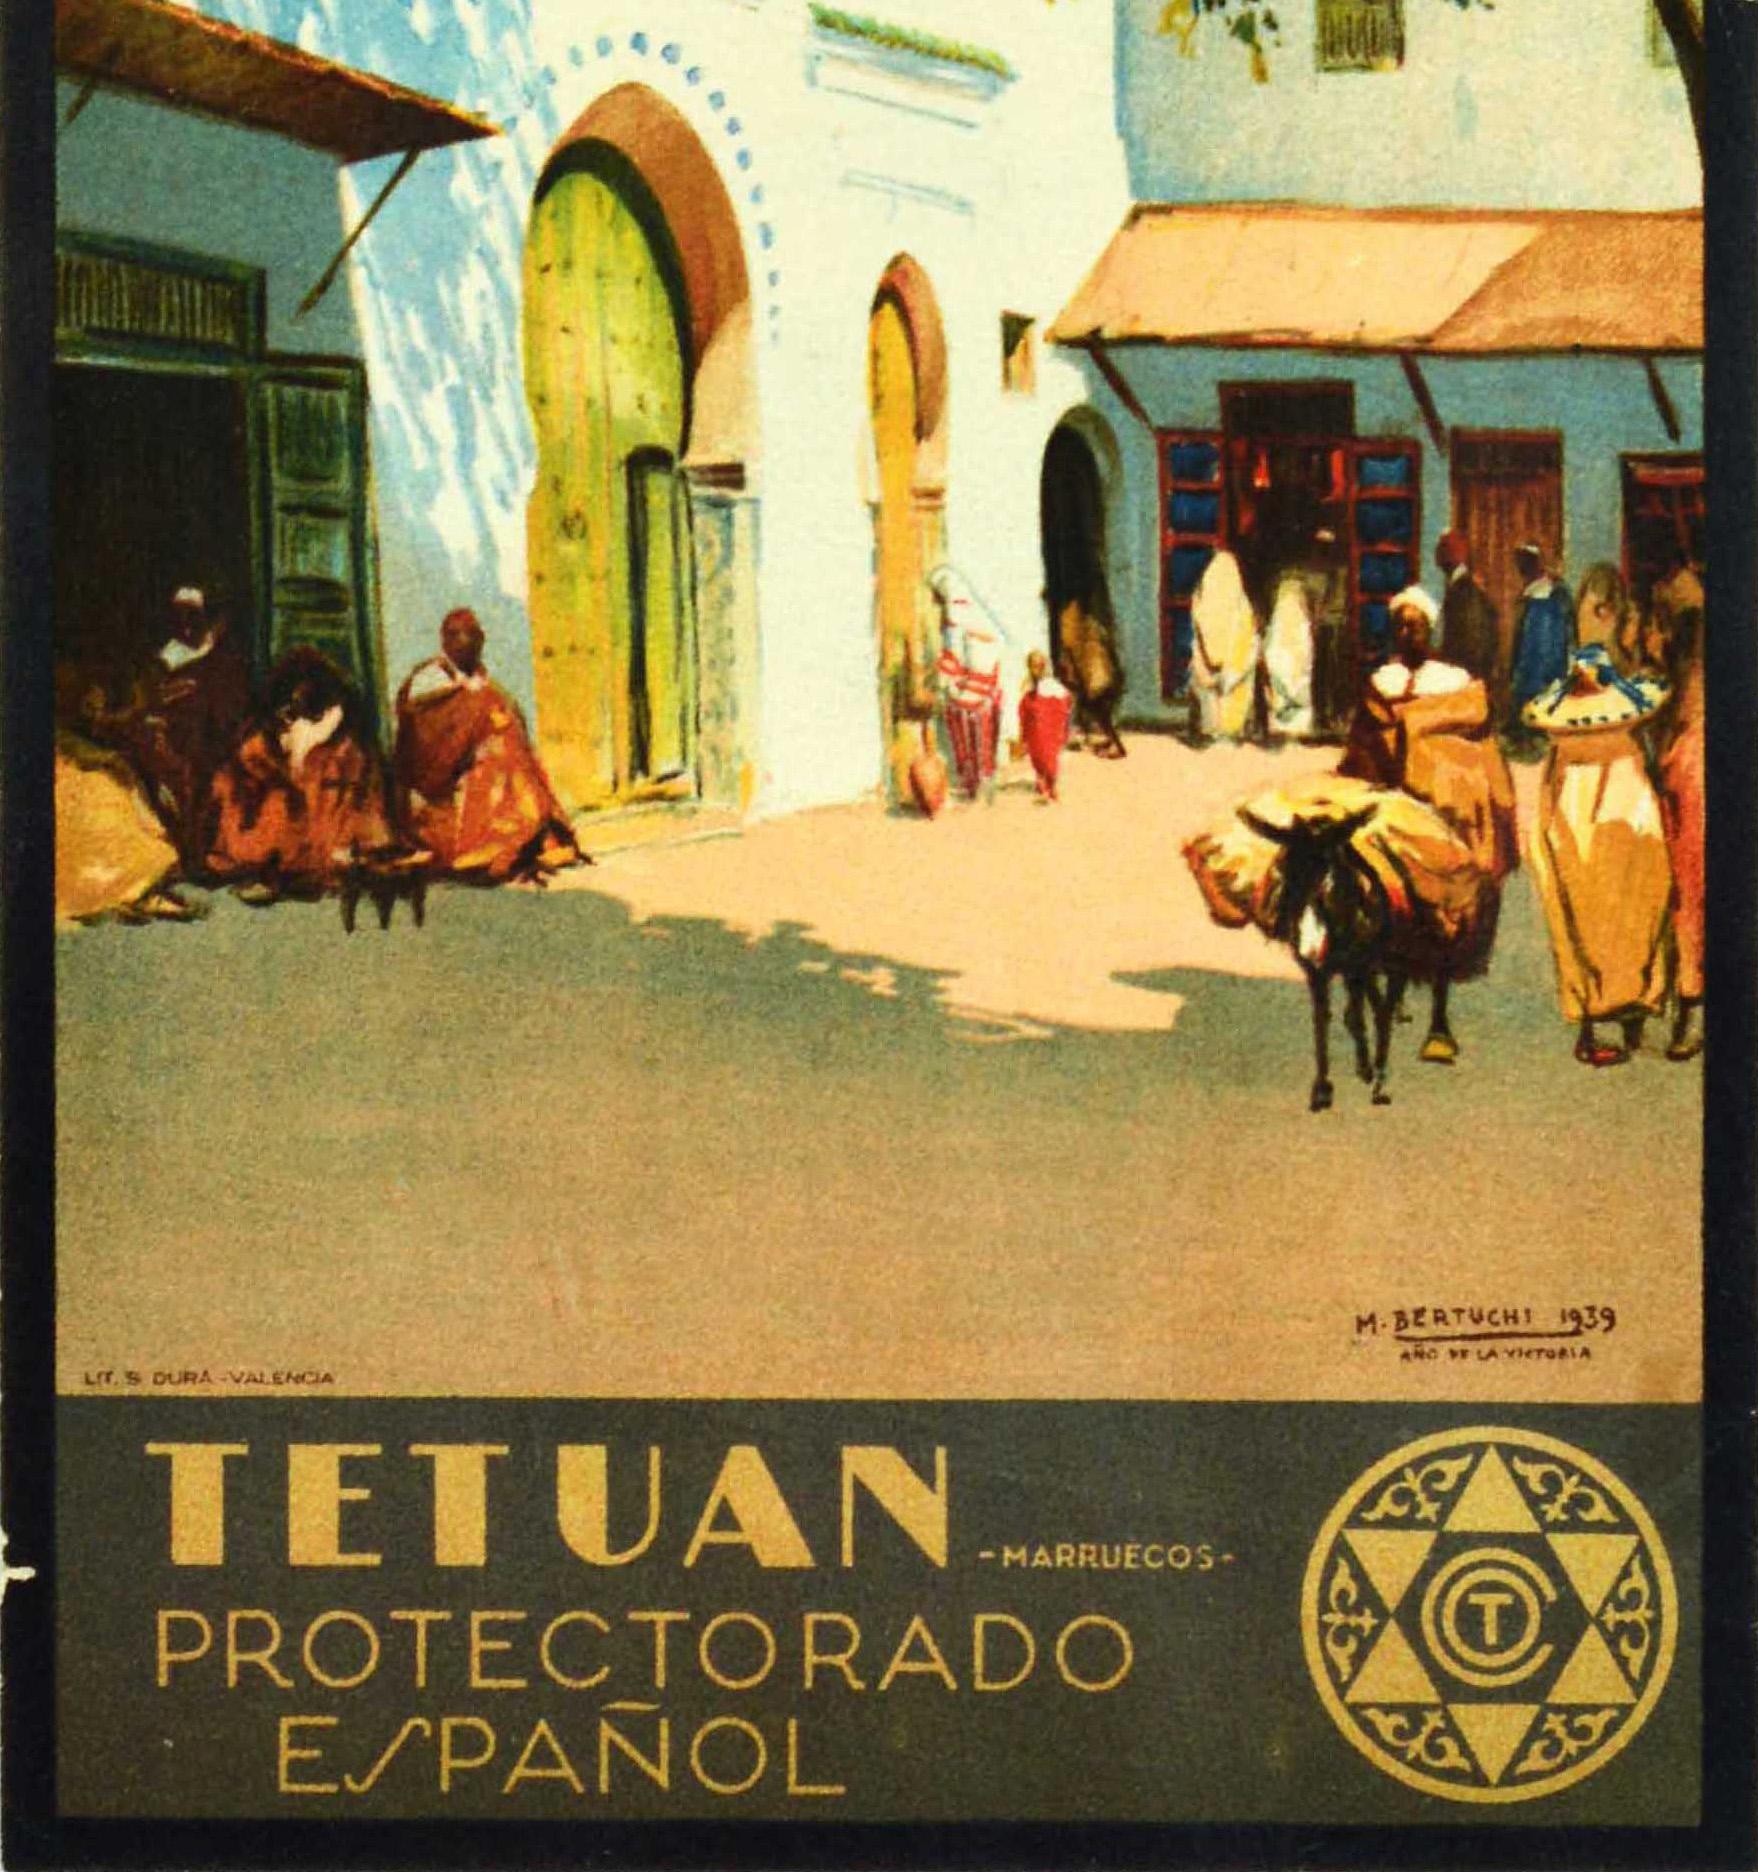 Original Vintage Travel Poster Tetuan Espanol Africa Morocco Mediterranean Sea In Good Condition In London, GB